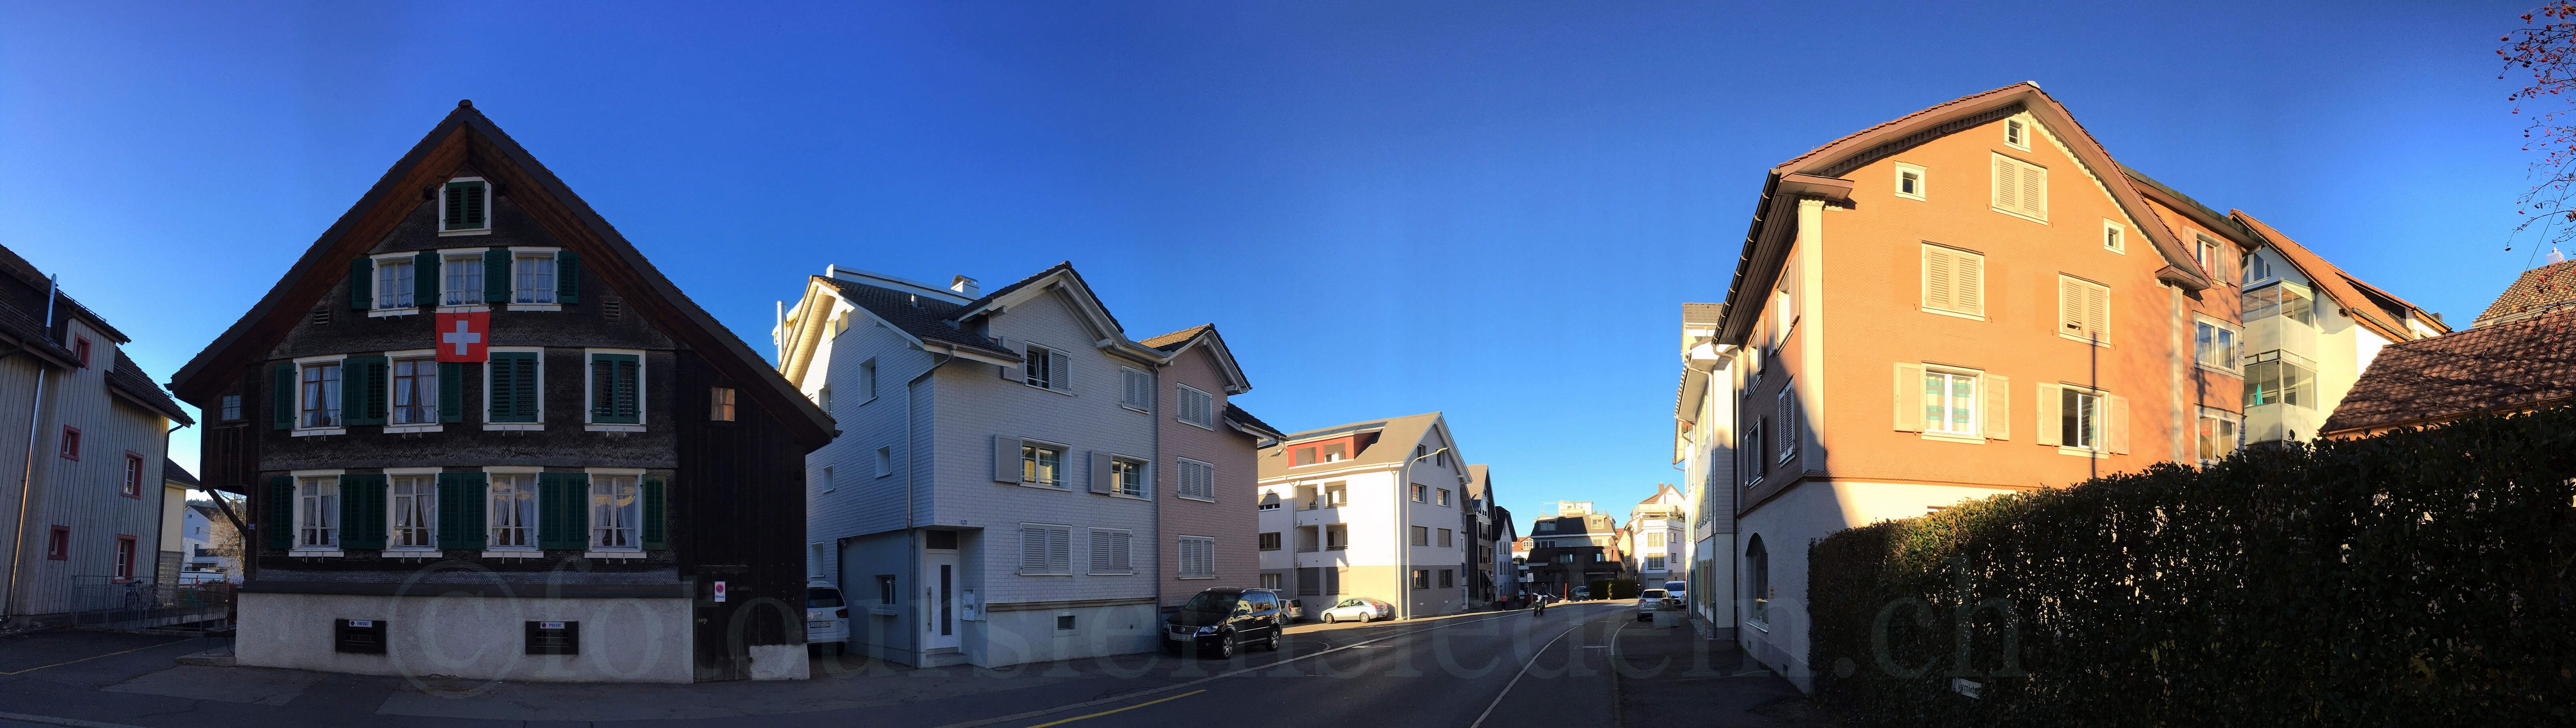 Panorama Einsiedeln 2020 076